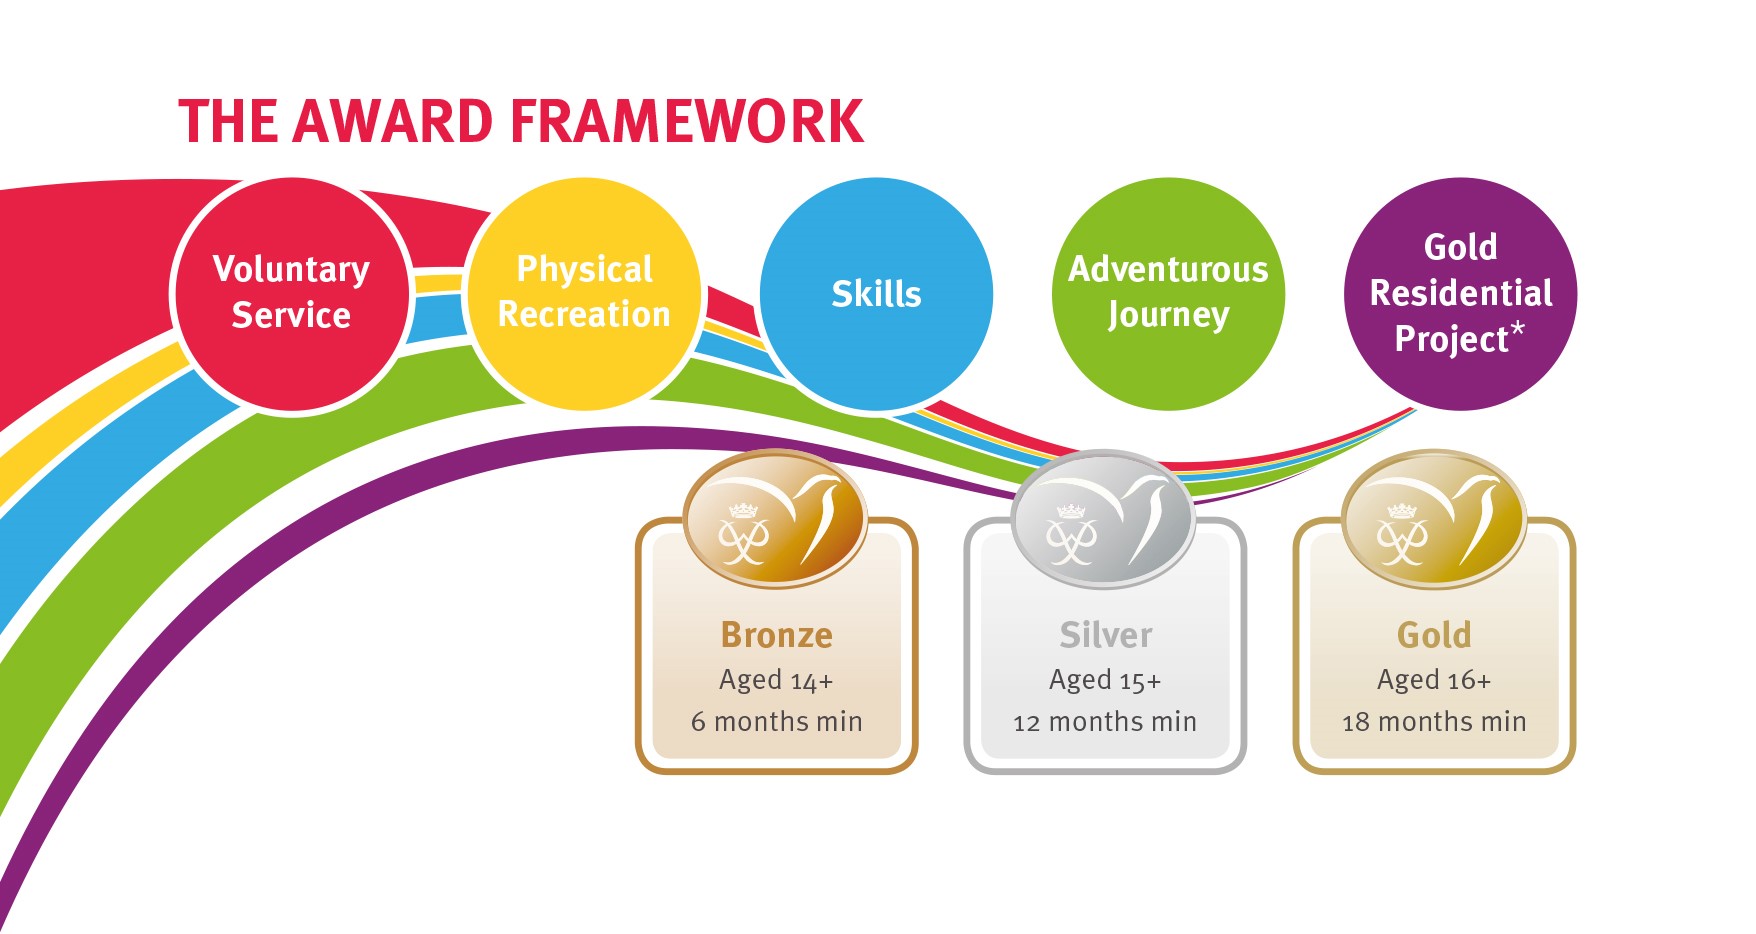 The Award framework and levels